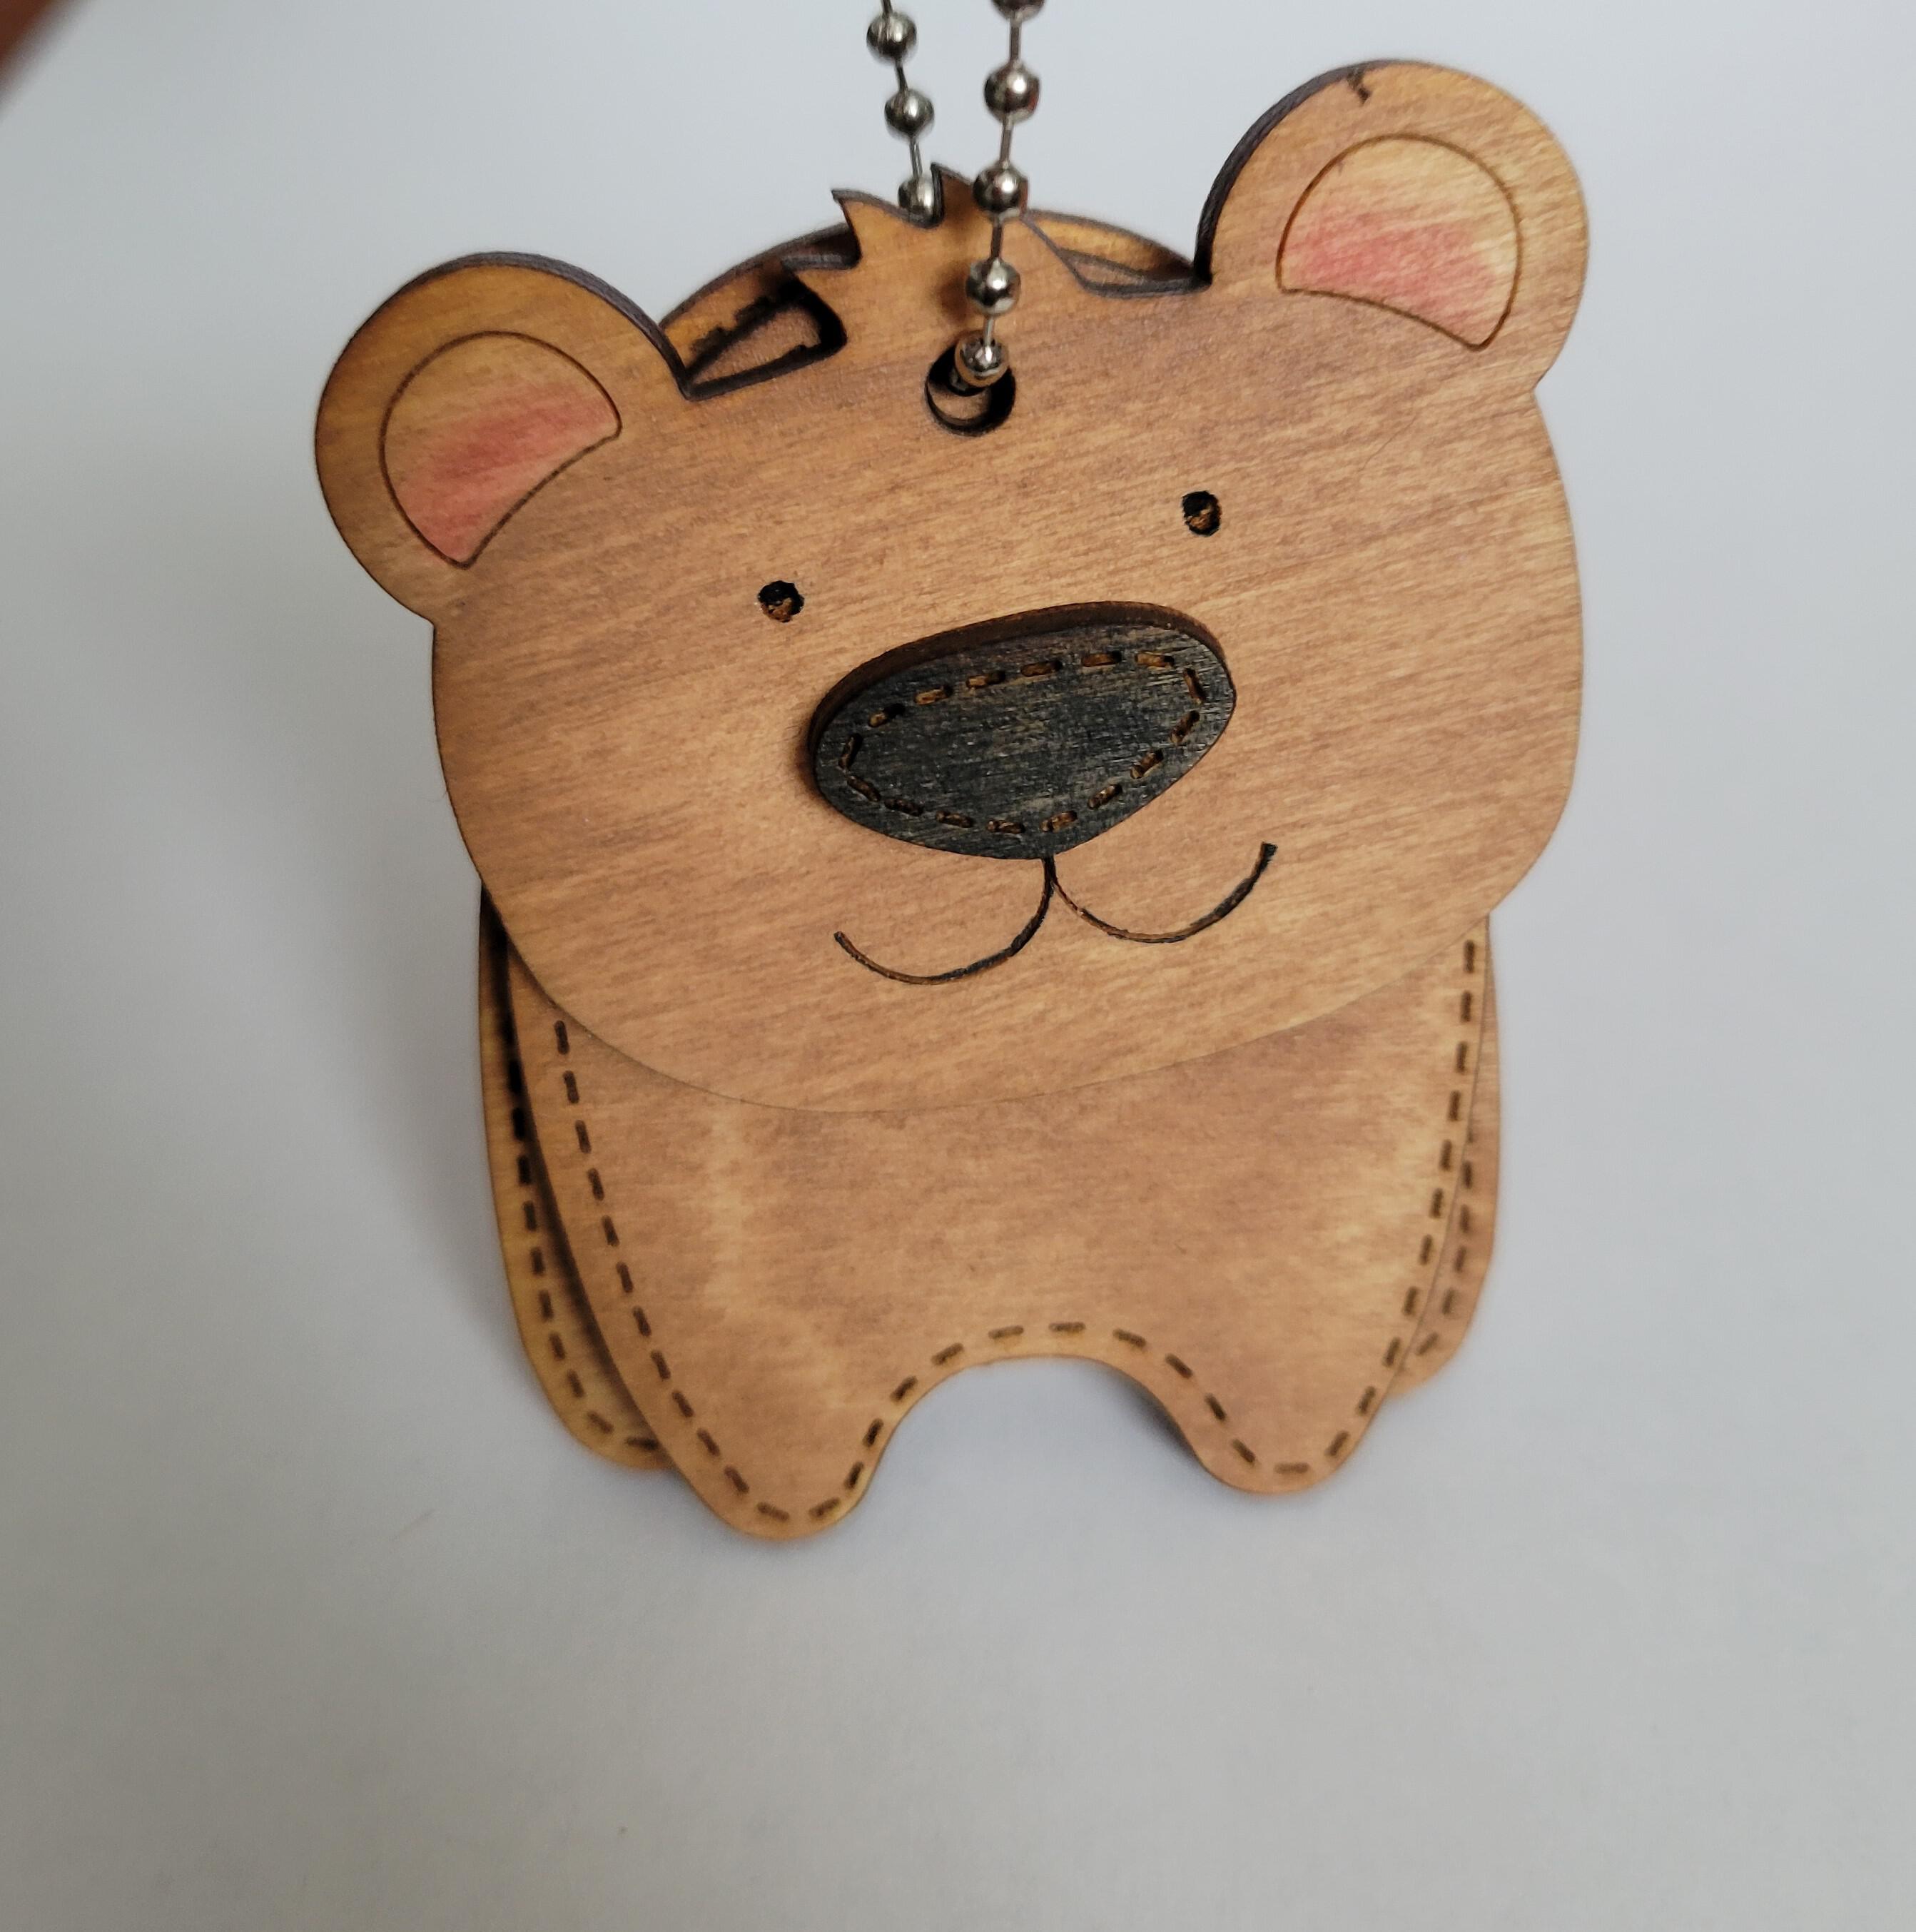 Animal Key Tags - Bear NecessitiesBear Necessities